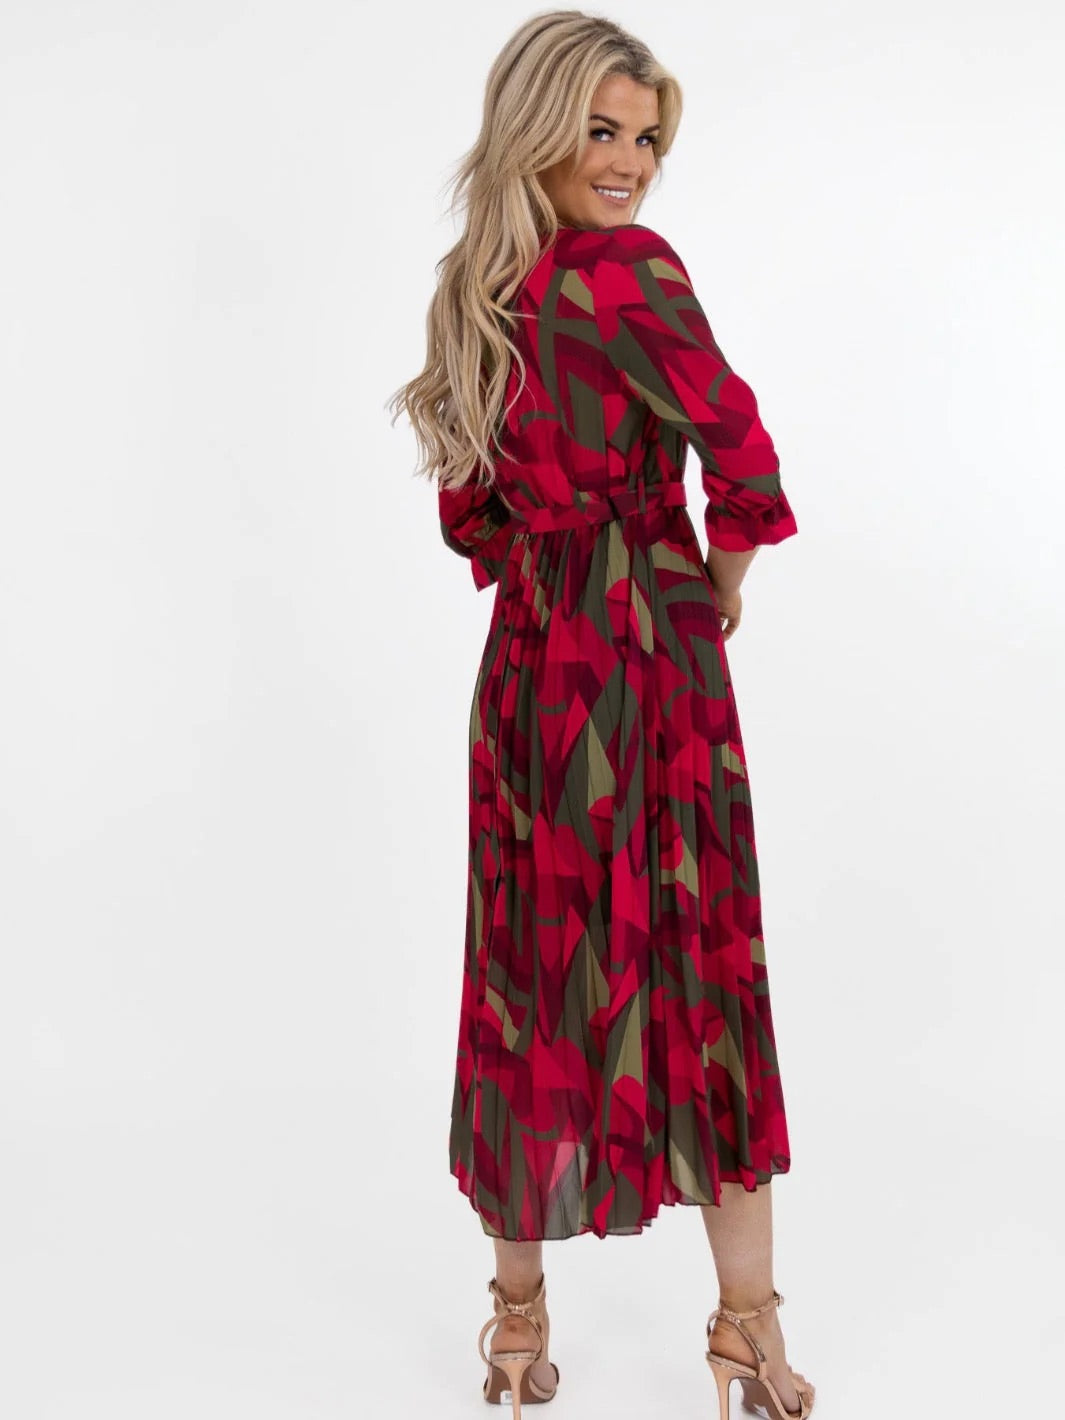 Positano Magenta/Khaki Print Midi Dress